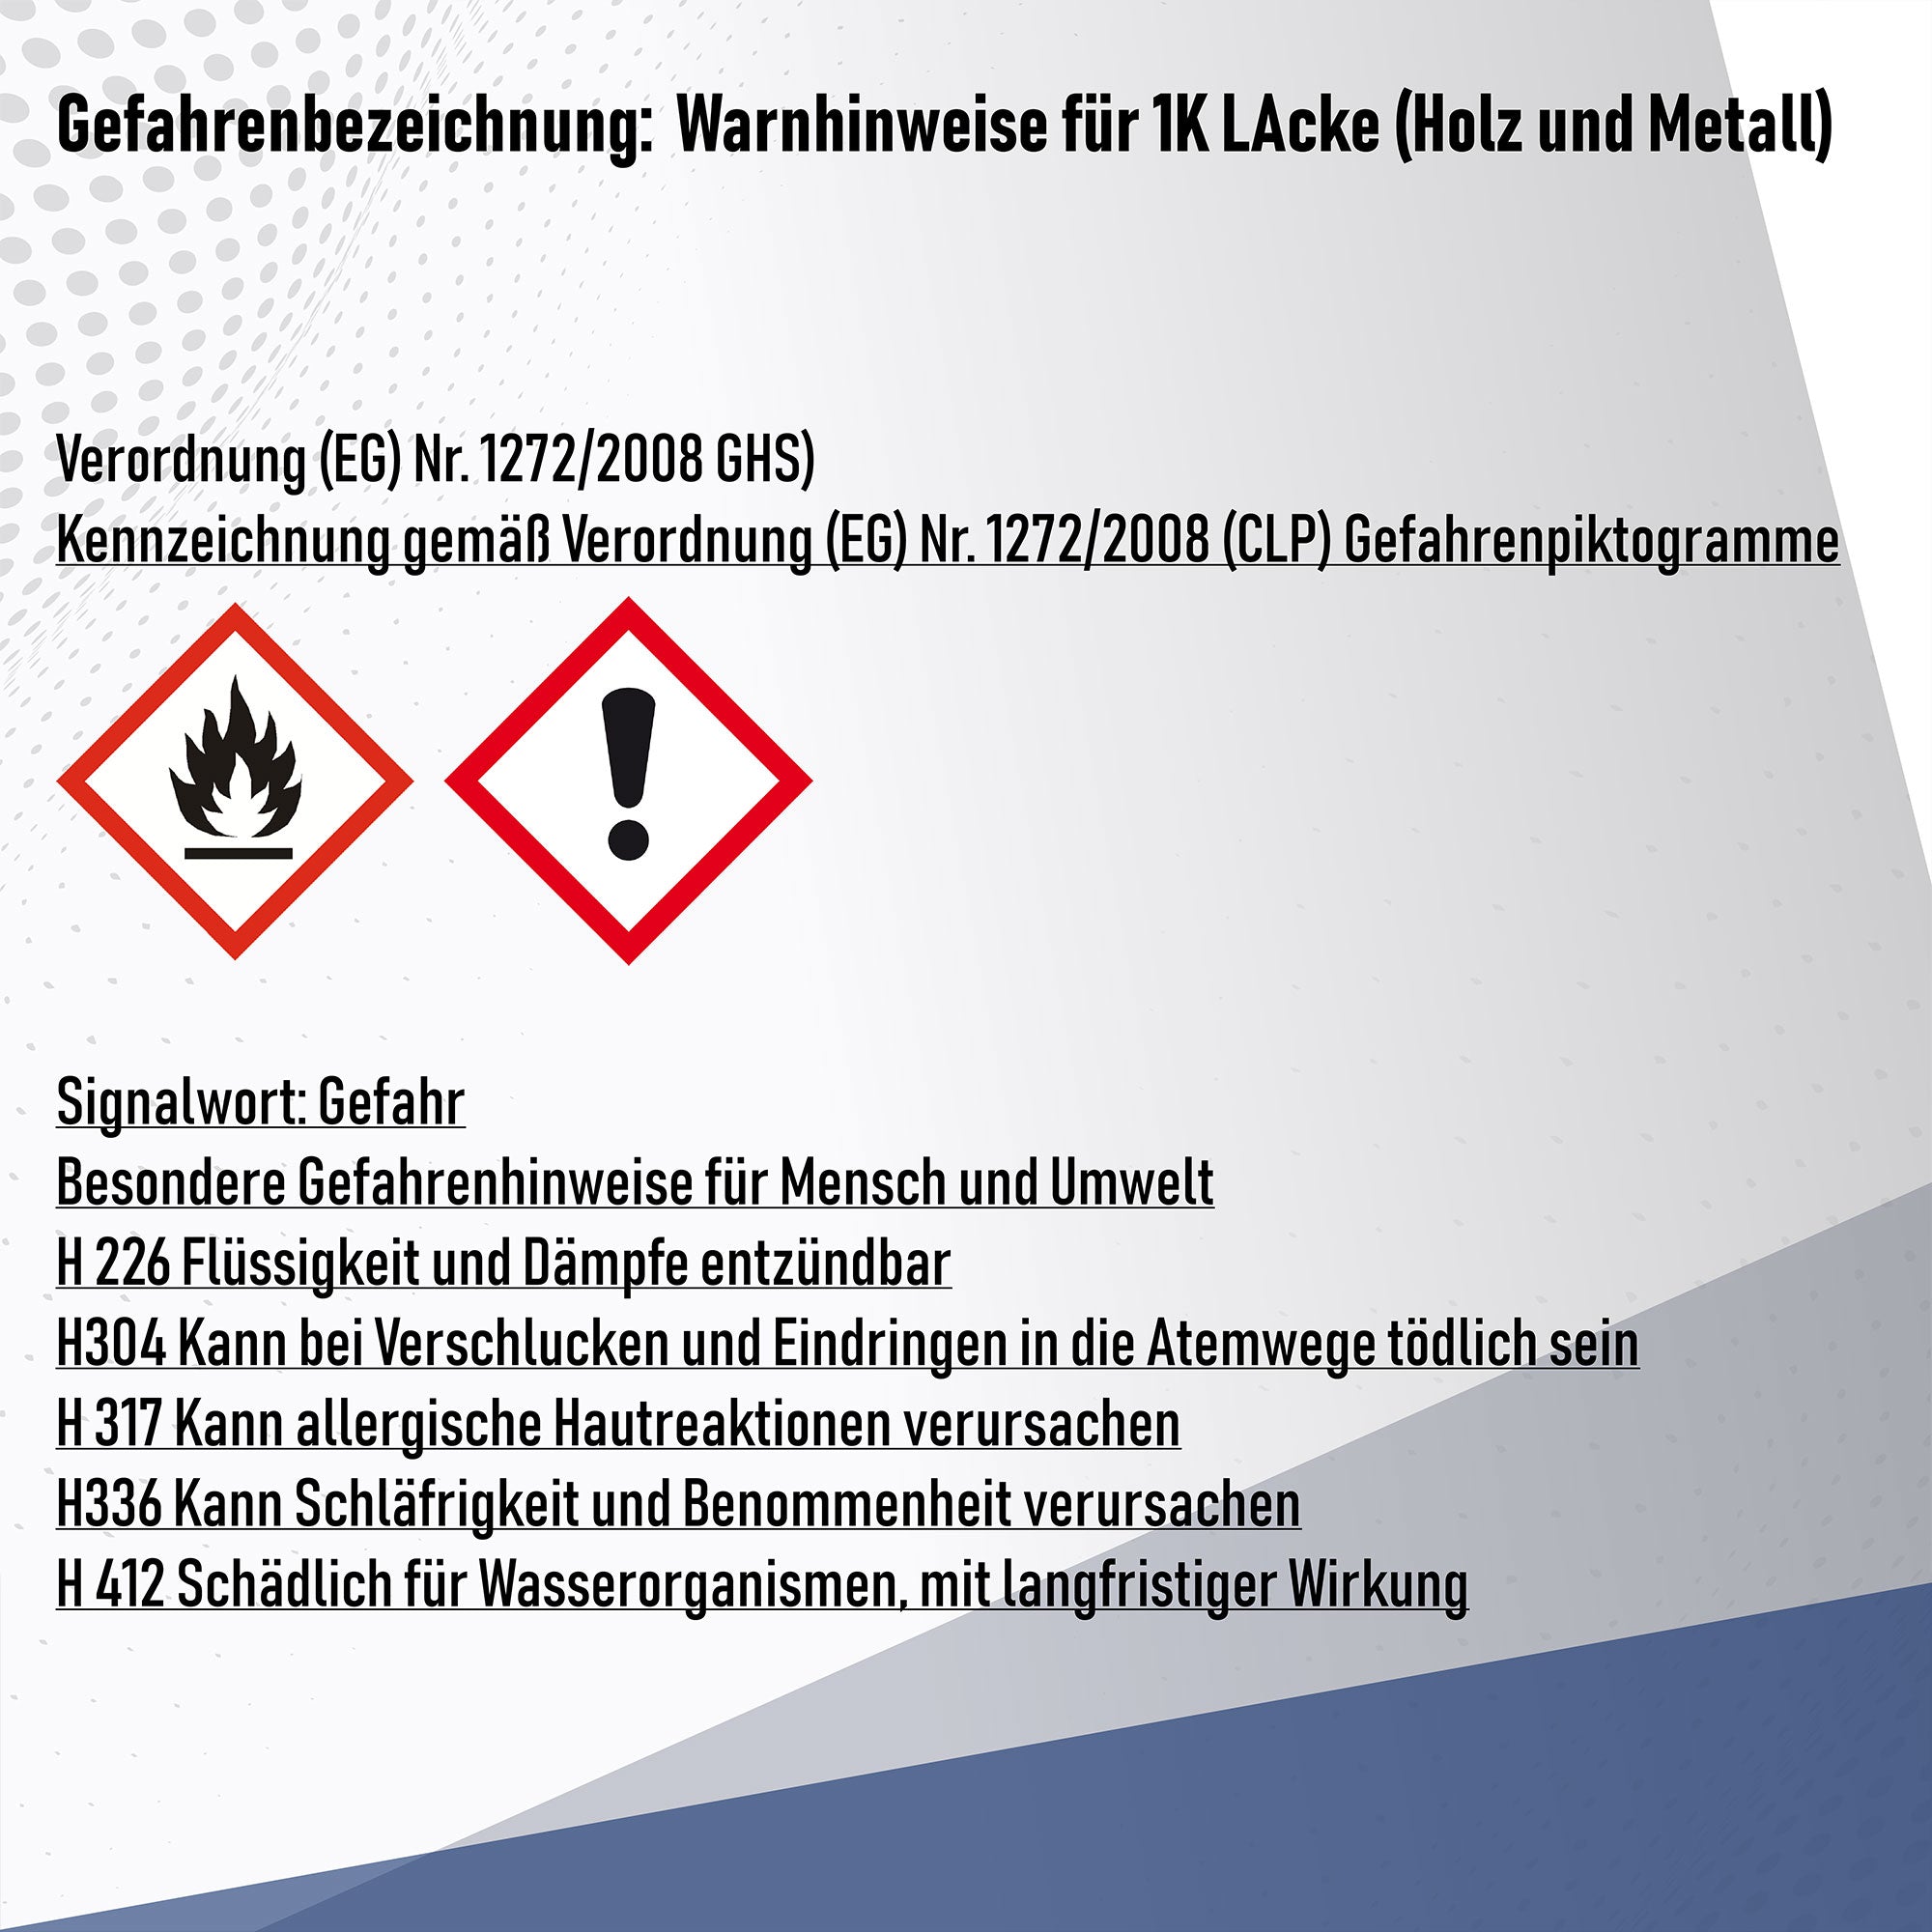 Hamburger Lack-Profi Buntlack in Rubinrot RAL 3003 mit Lackierset (X300) & Verdünnung (1 L) - 30% Sparangebot